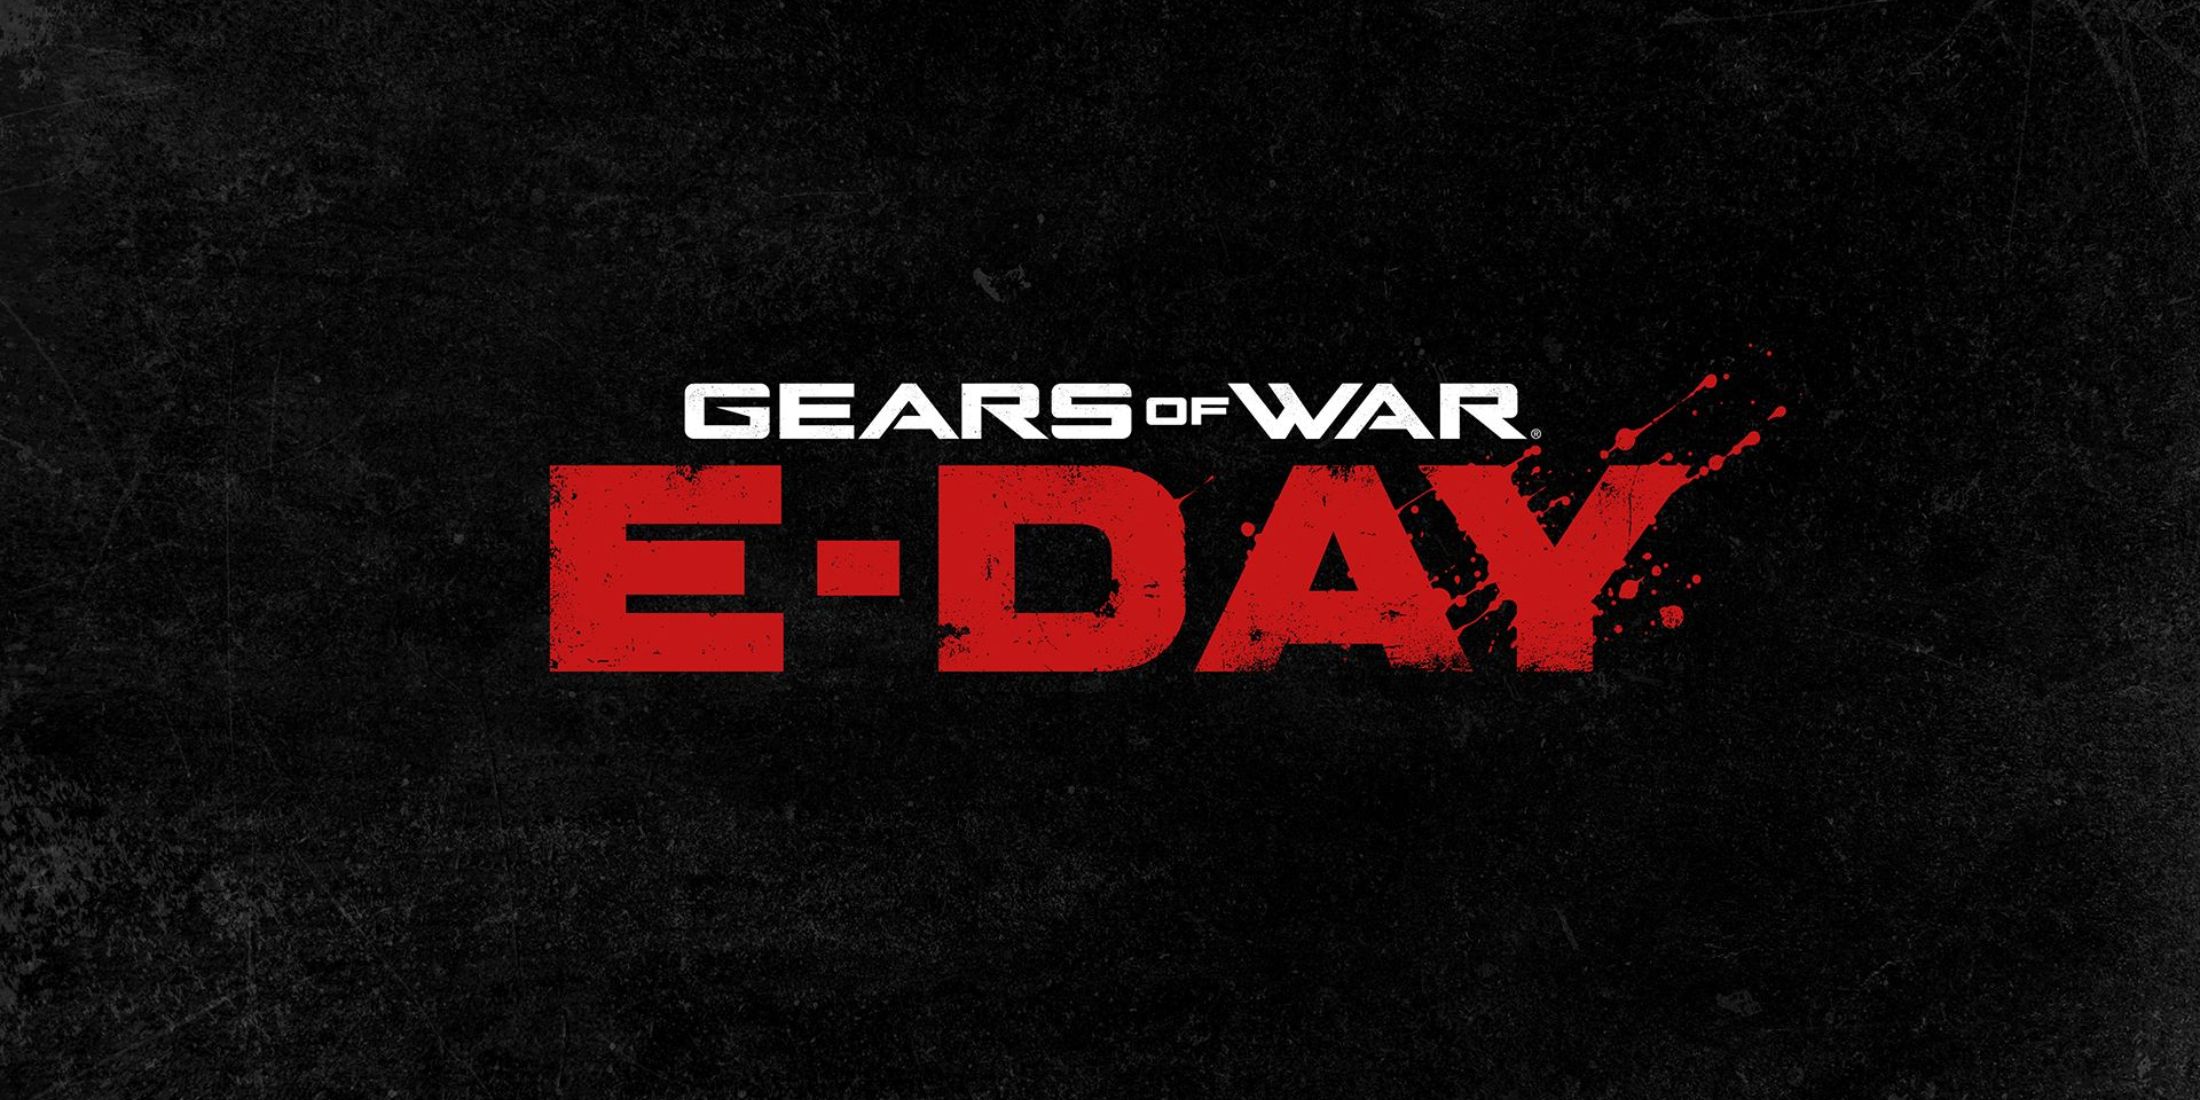 Gears of War E-Day Text